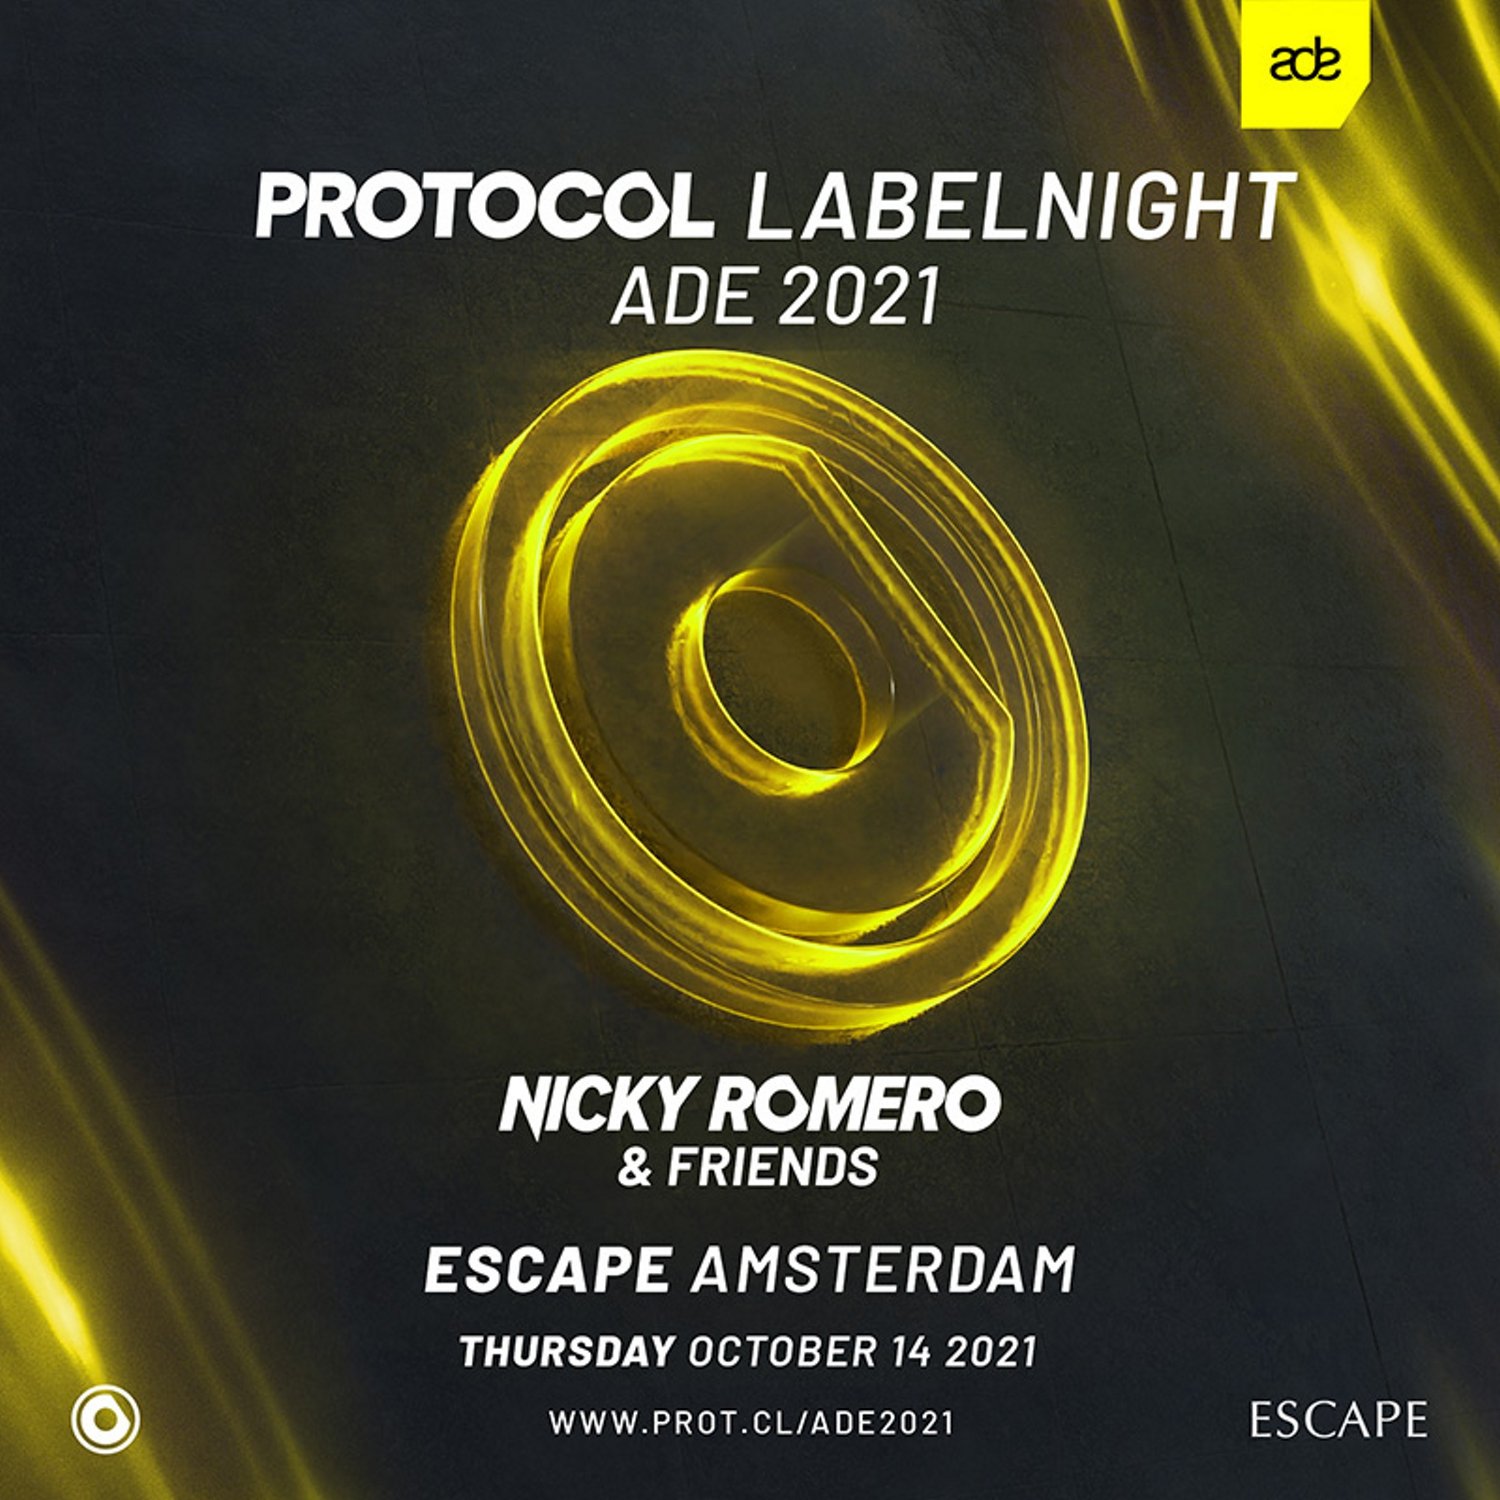 Nicky Romero presents: Protocol Labelnight ADE ’21